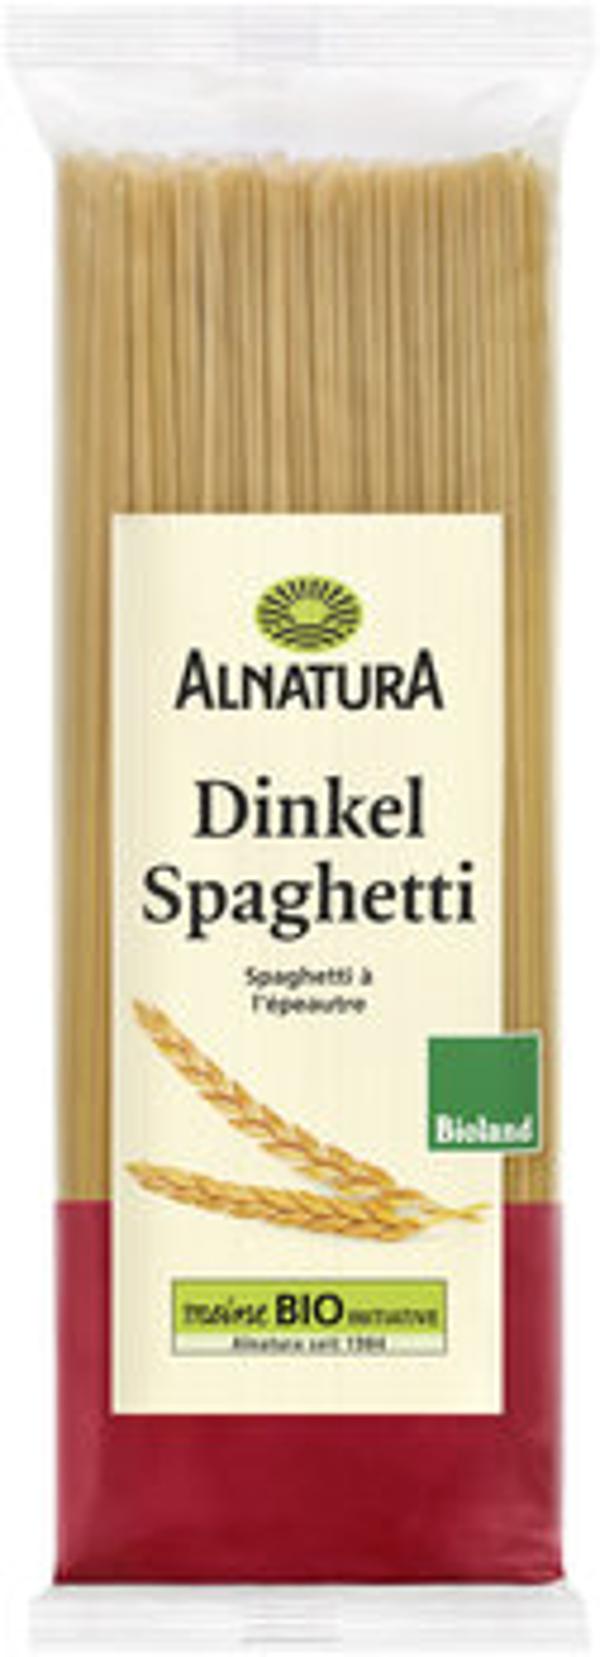 Produktfoto zu Alnatura Dinkel Spaghetti 500g